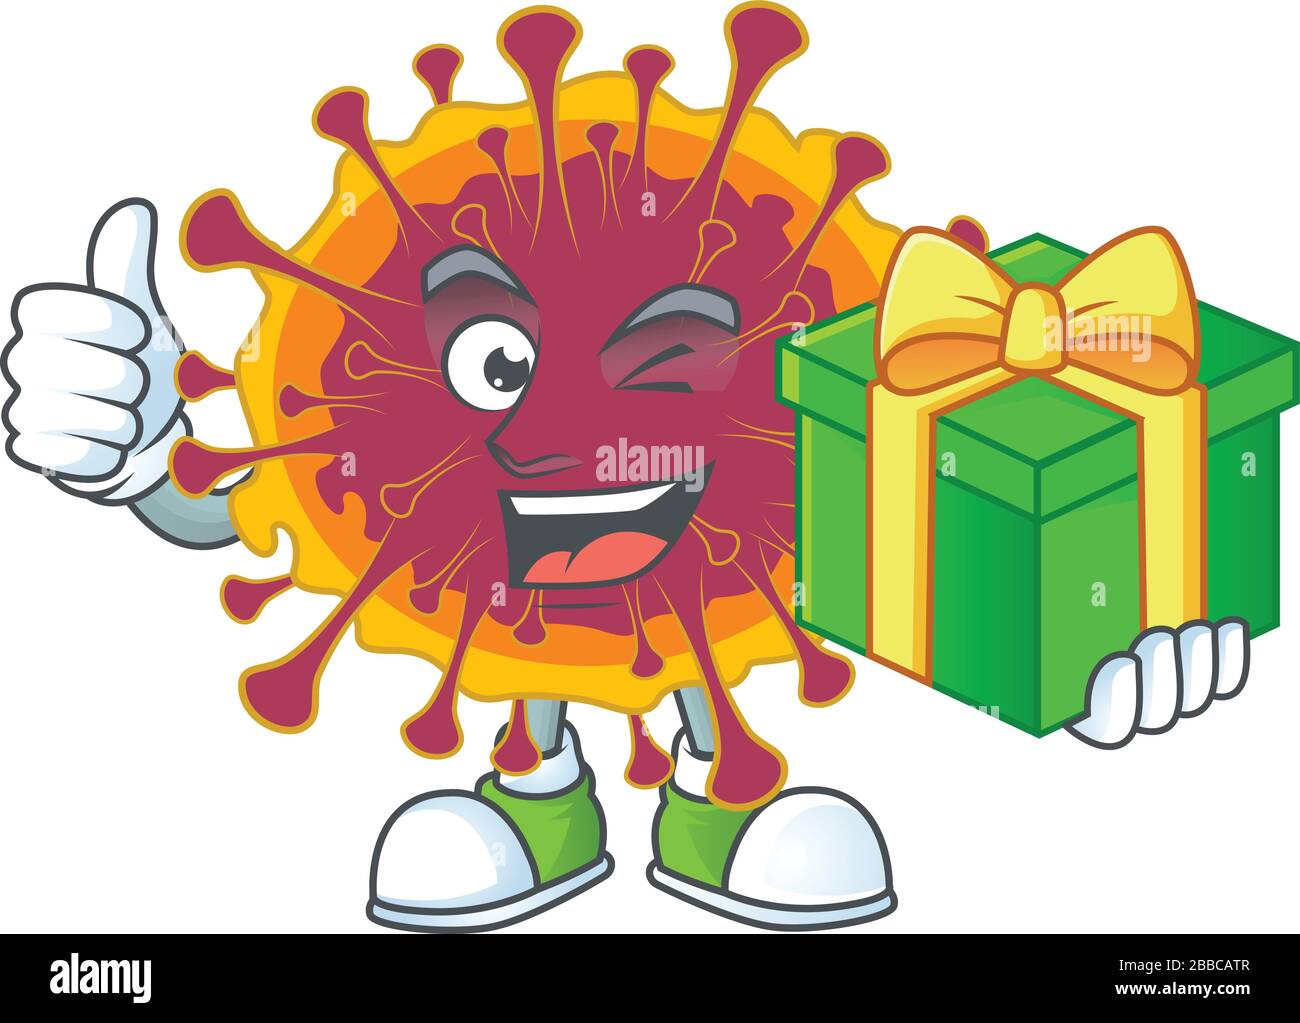 Cheerful spreading coronavirus cartoon character holding a gift box Stock Vector